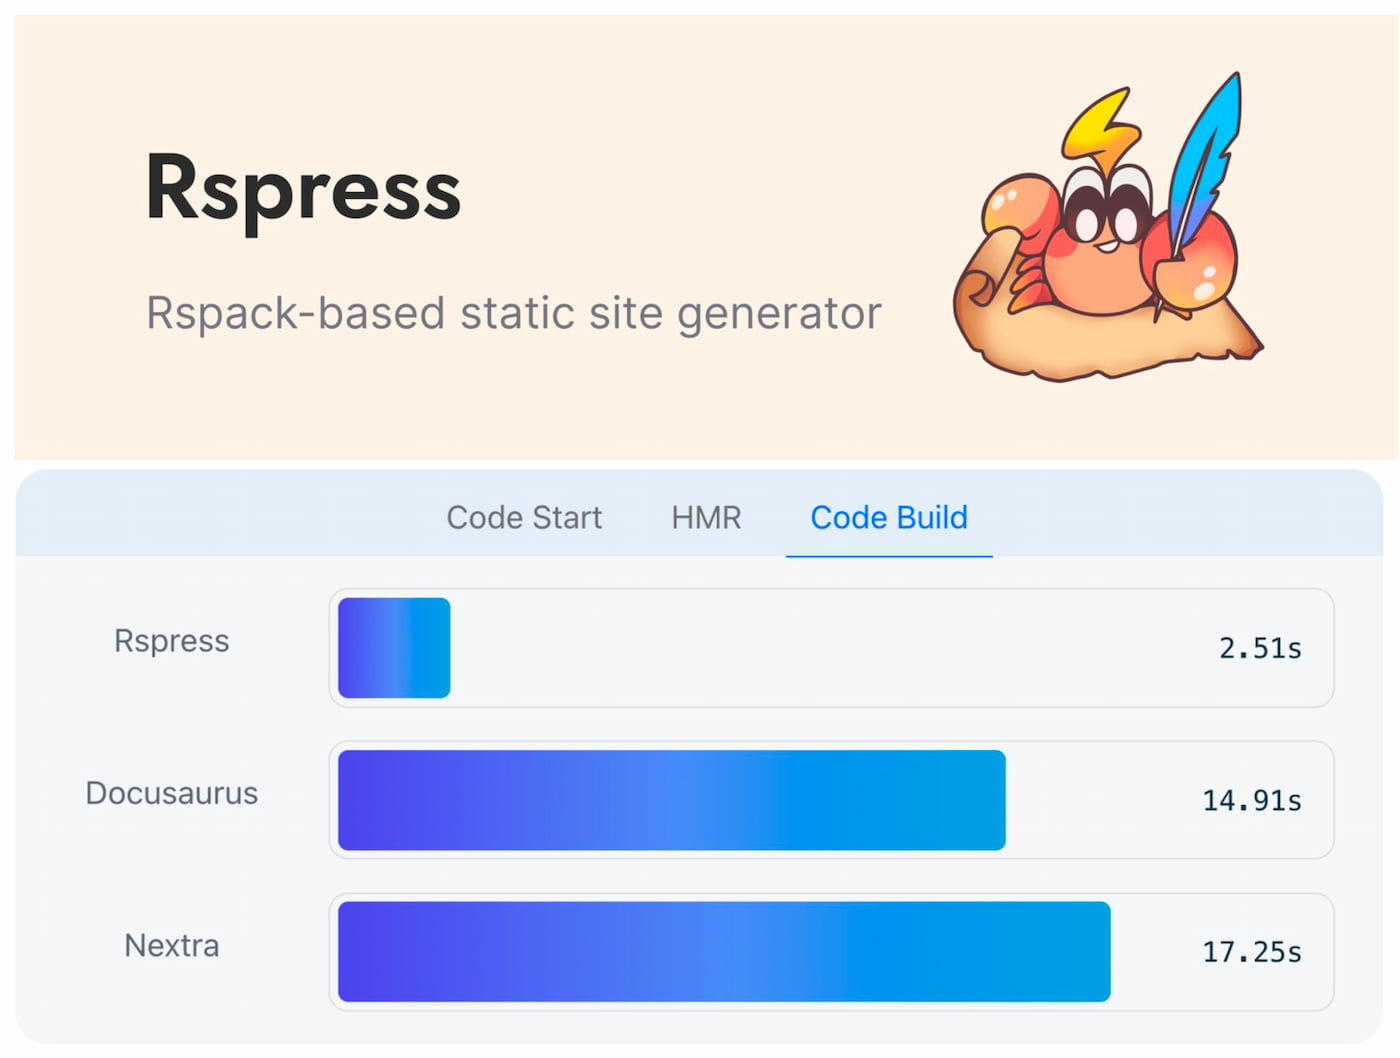 Rspress v1.0 - A fast Rspack-based static site generator